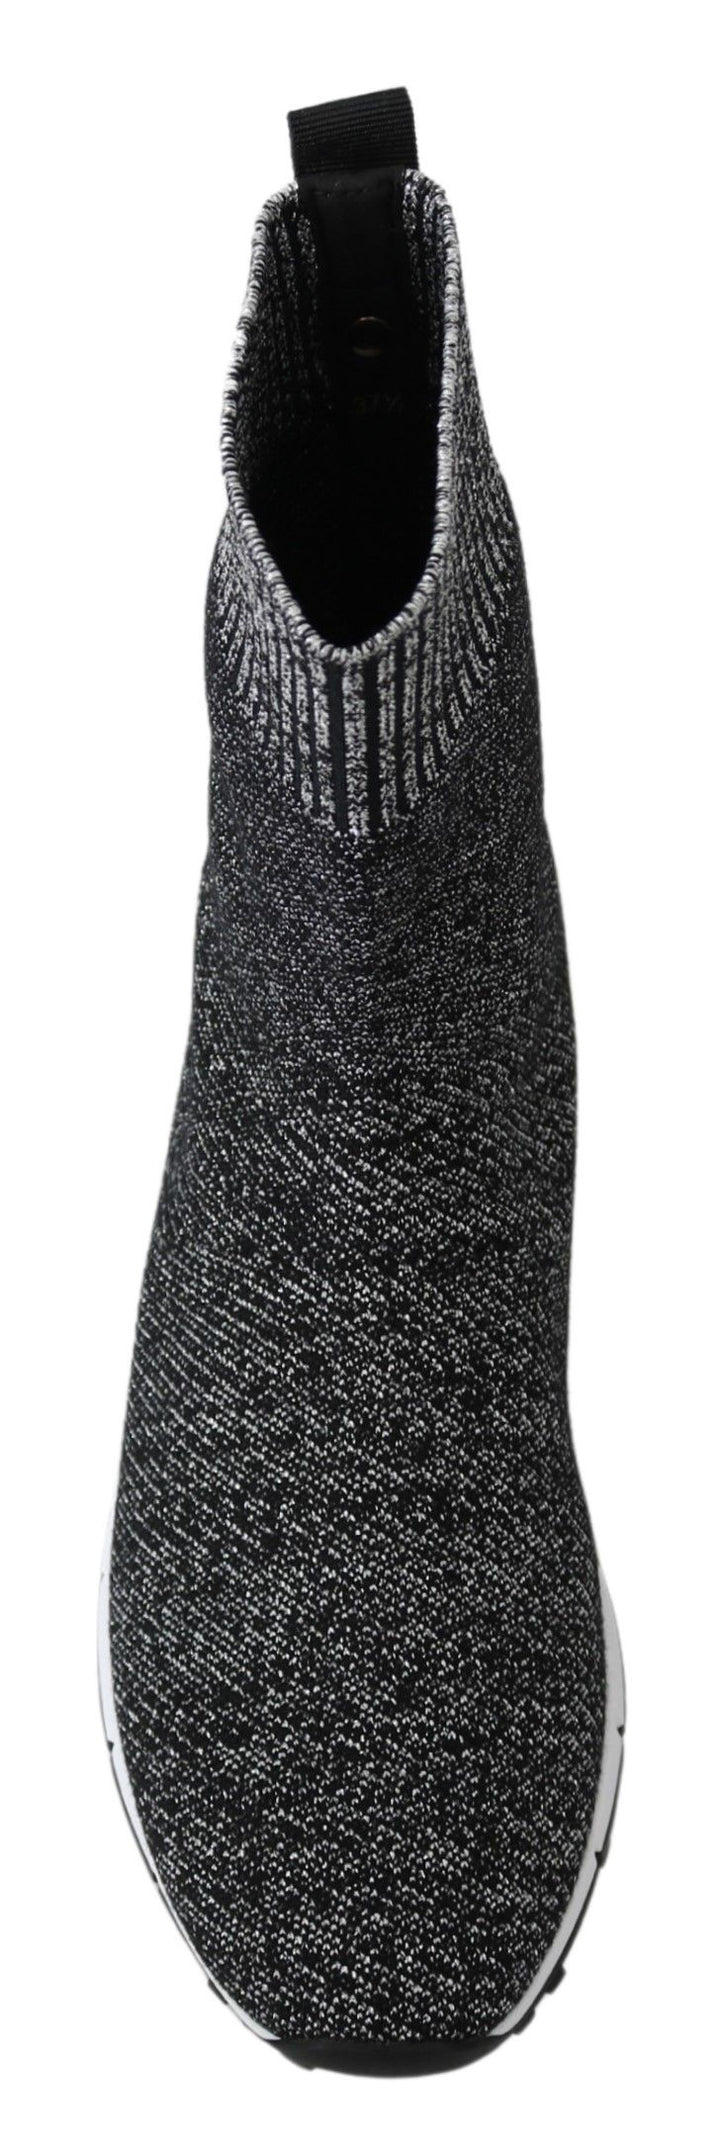 Jimmy Choo Elegant Knitted Lurex Sneakers in Black and Silver